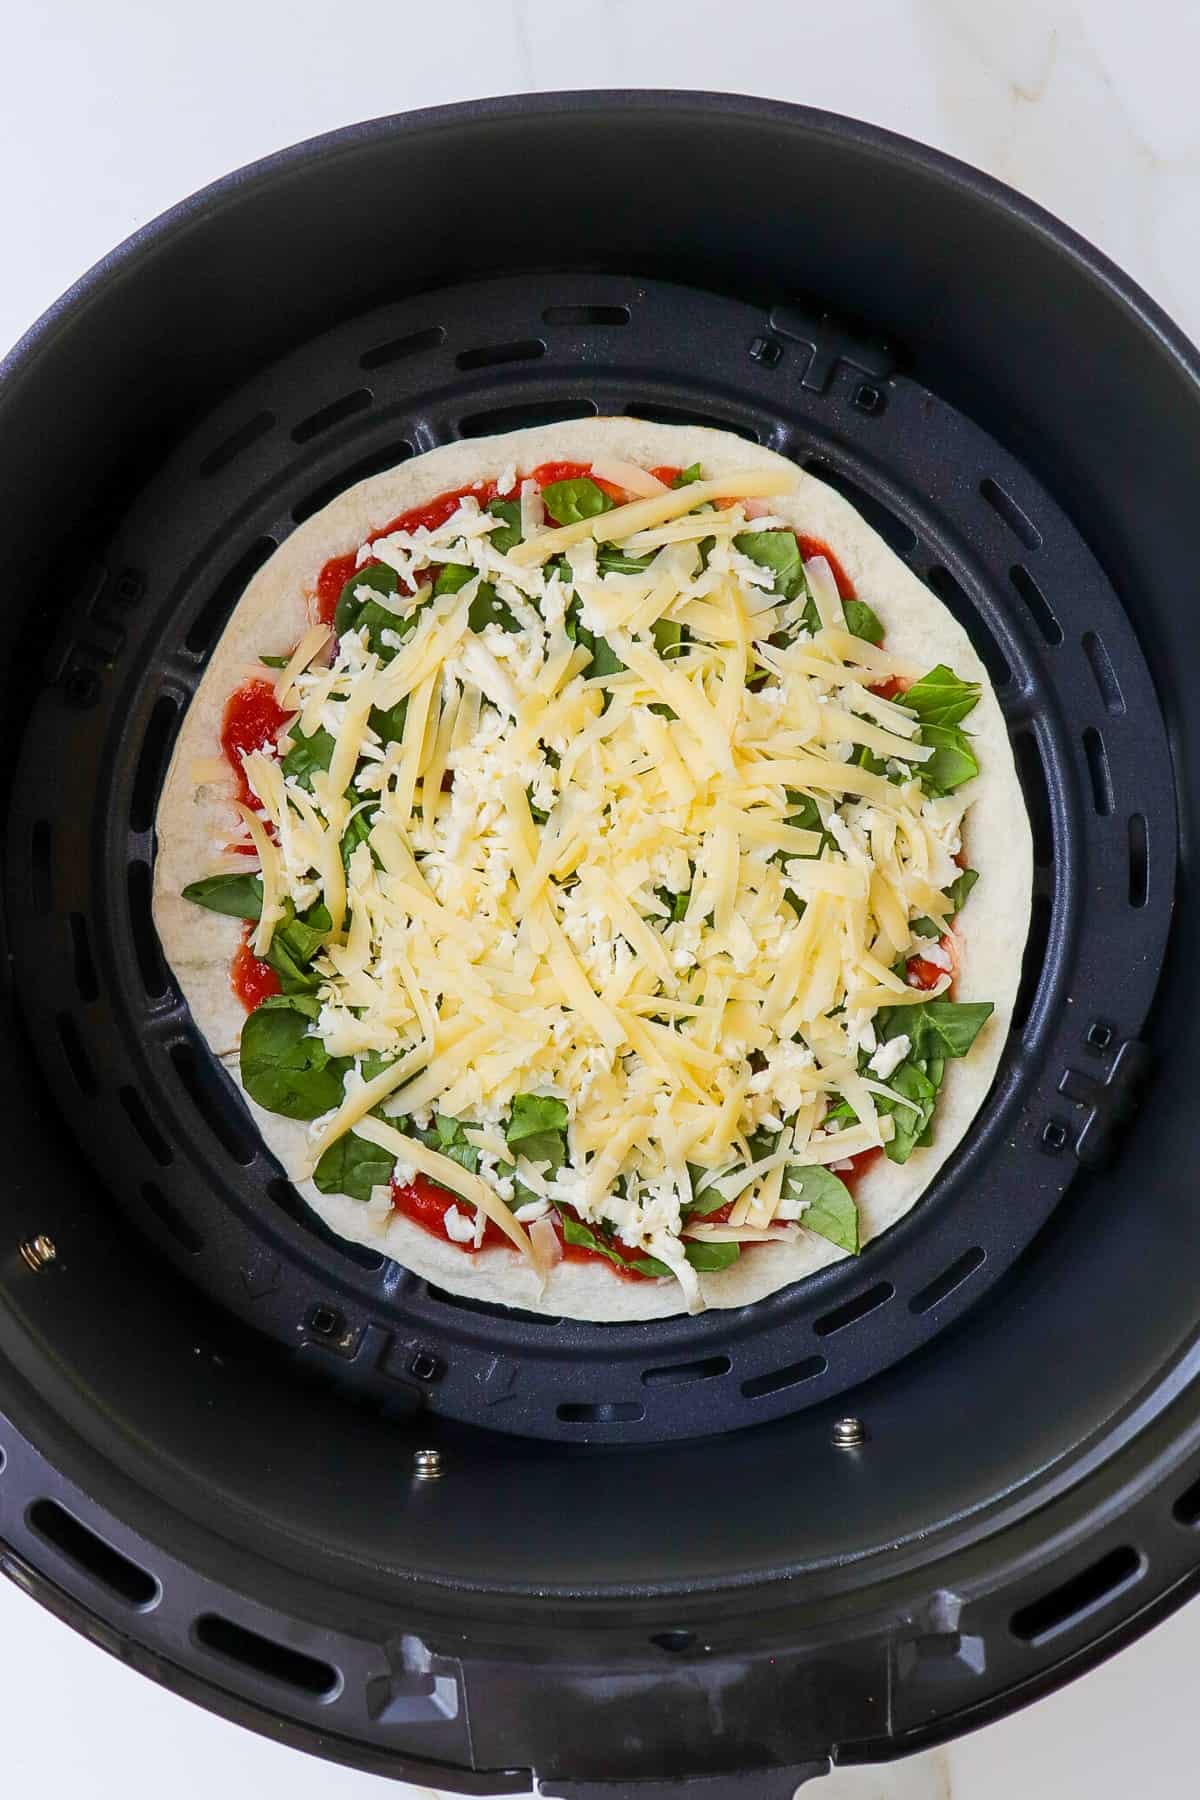 Tortilla pizza in air fryer basket.